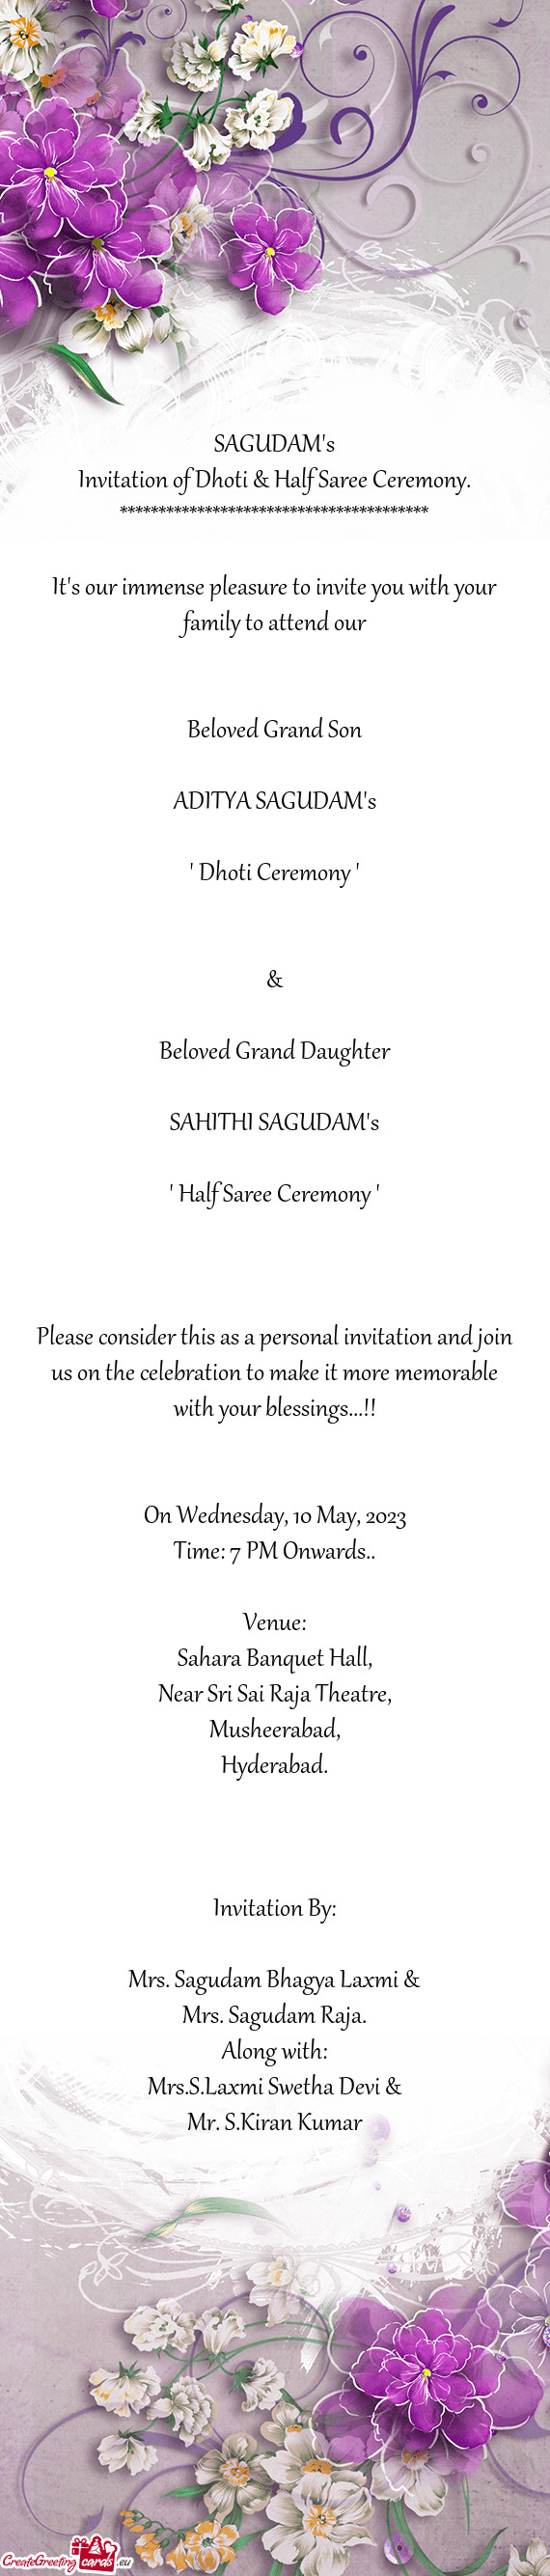 Invitation of Dhoti & Half Saree Ceremony